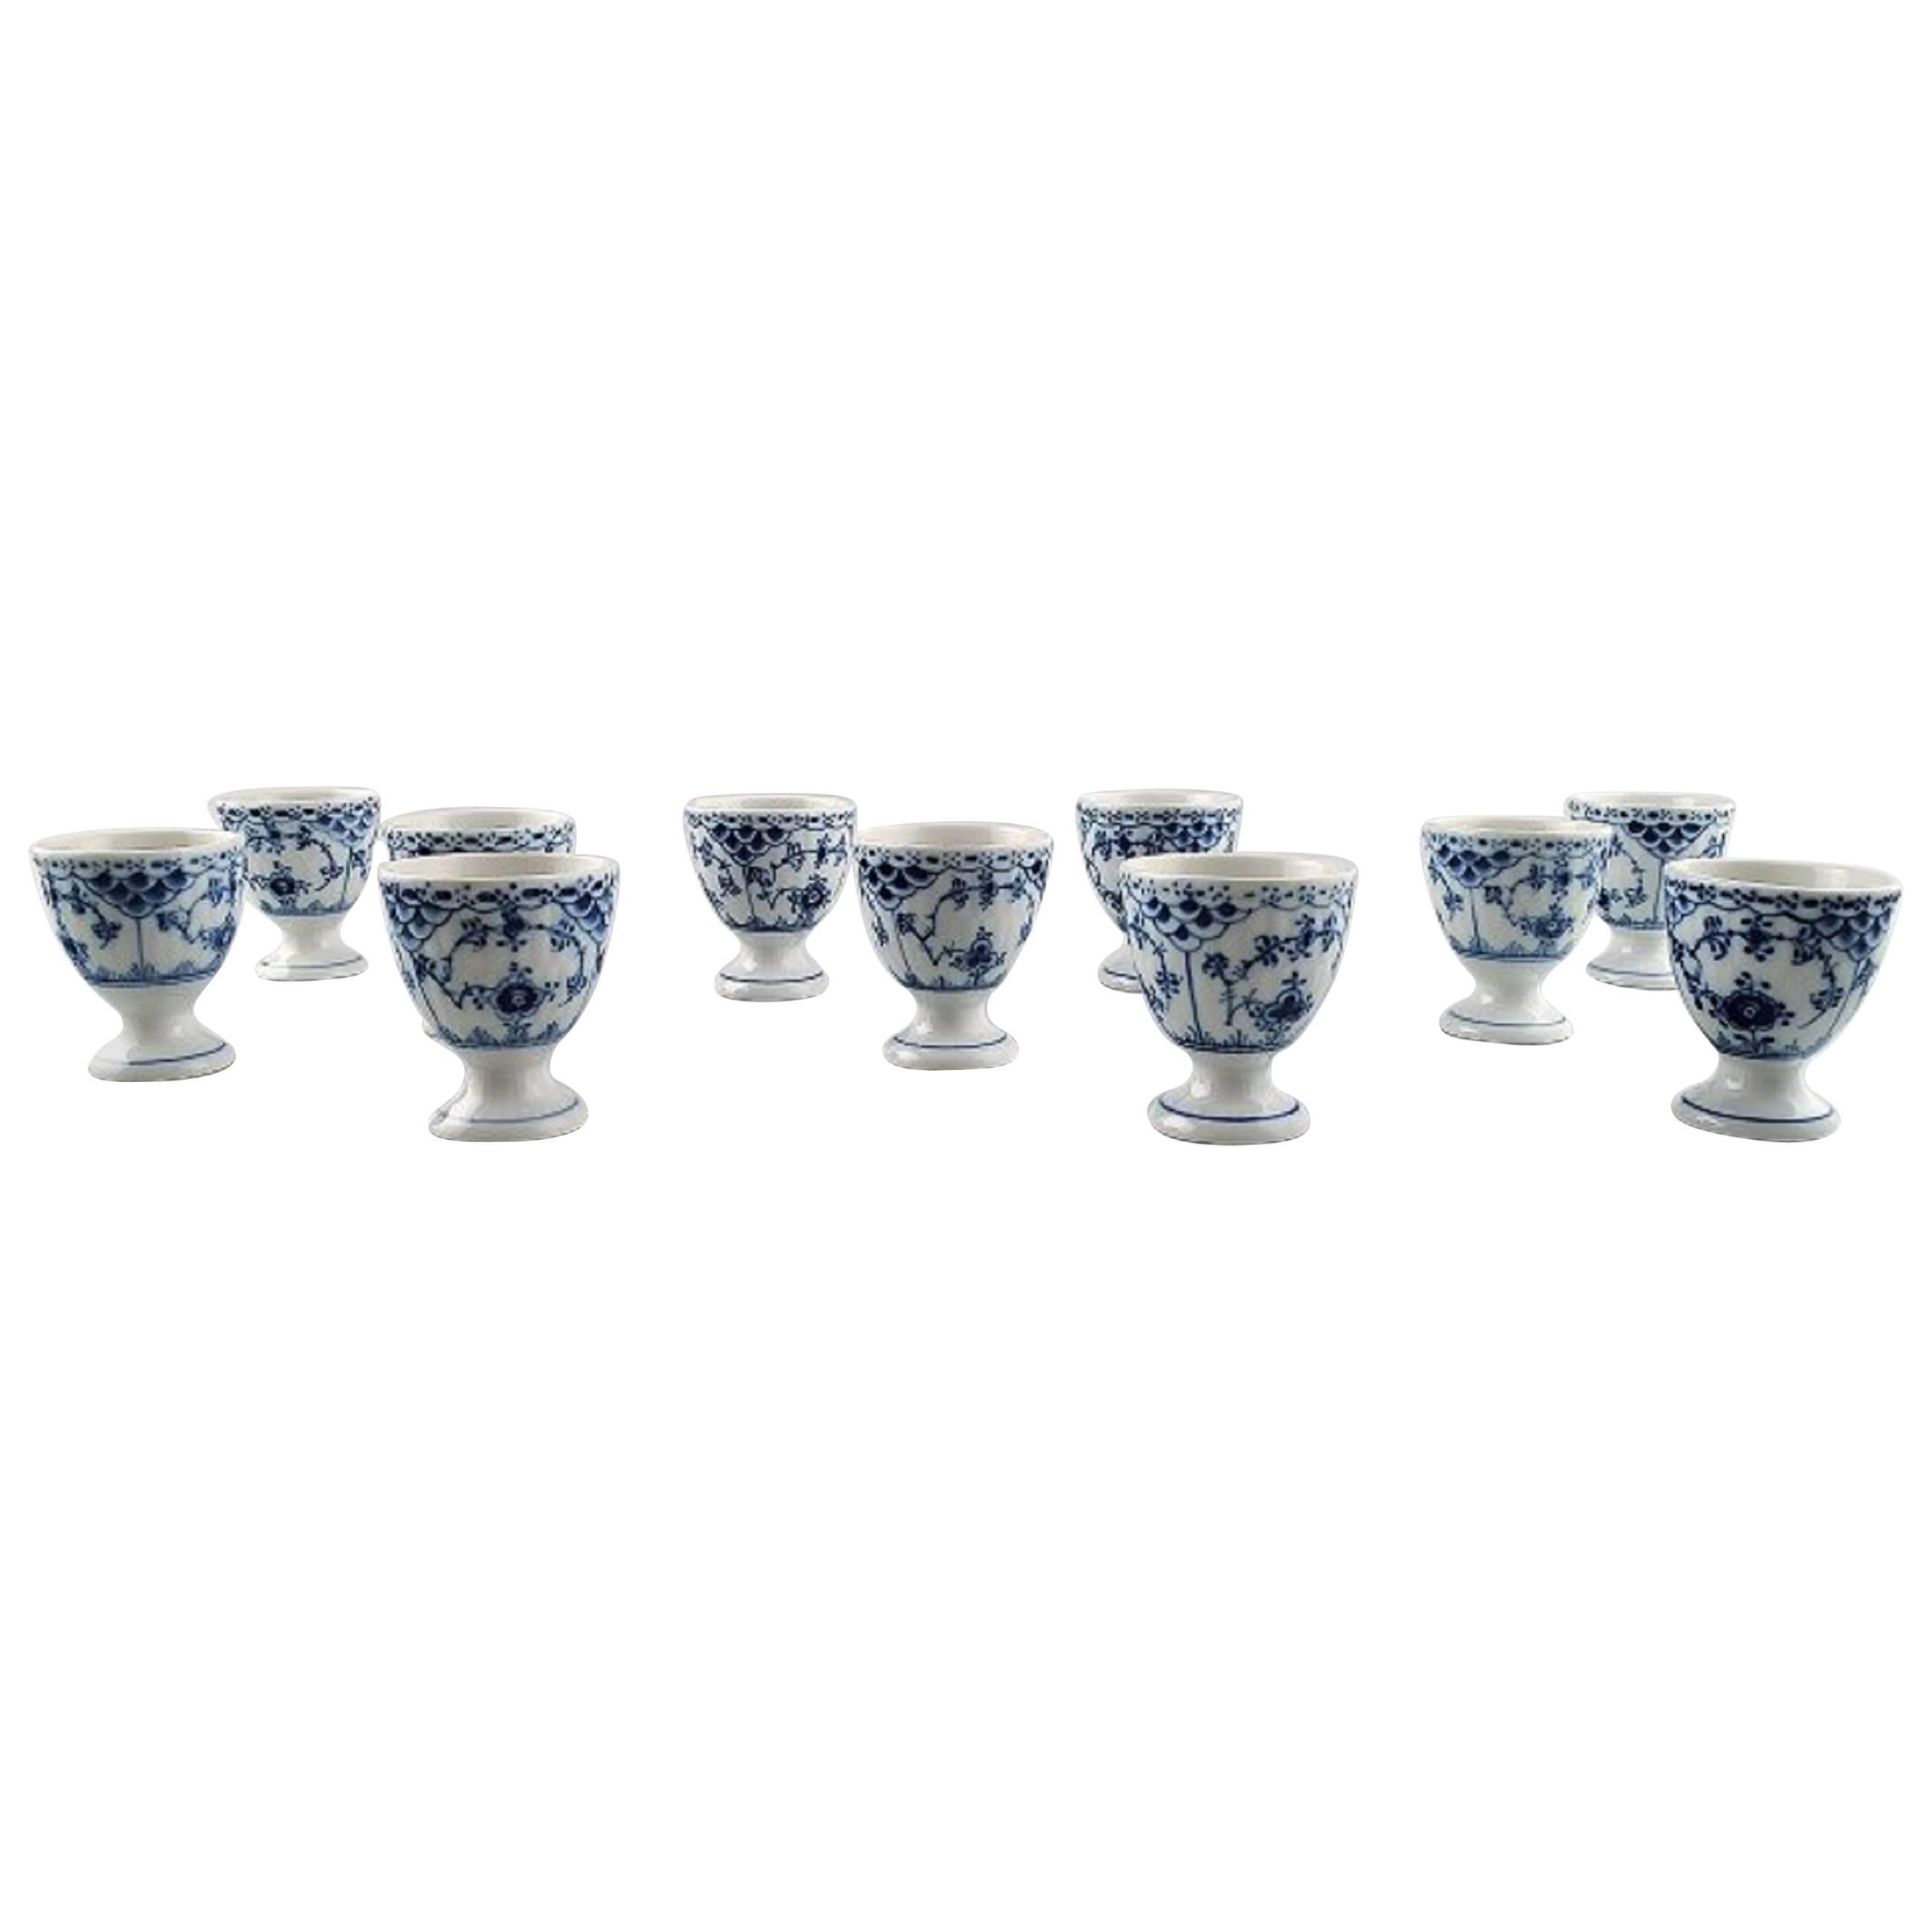 11 Royal Copenhagen Blue Fluted Half Lace Egg Cups, Produced 1894-1928